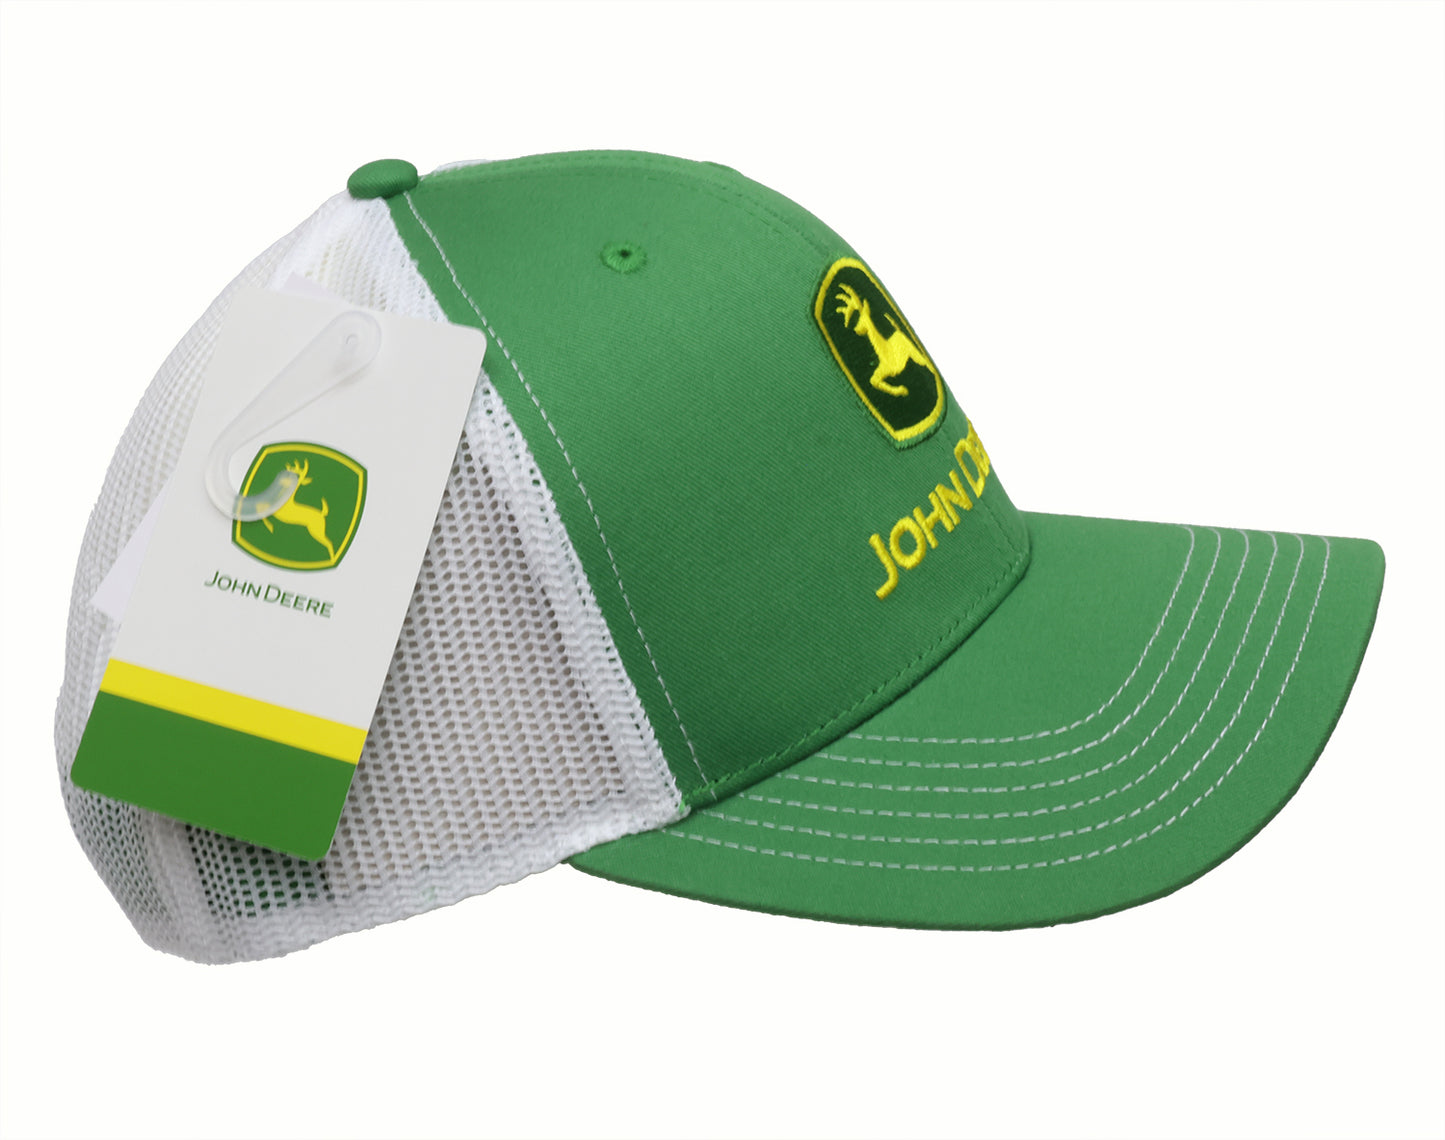 John Deere Men's Green/White Embro Cap/Hat - LP86112